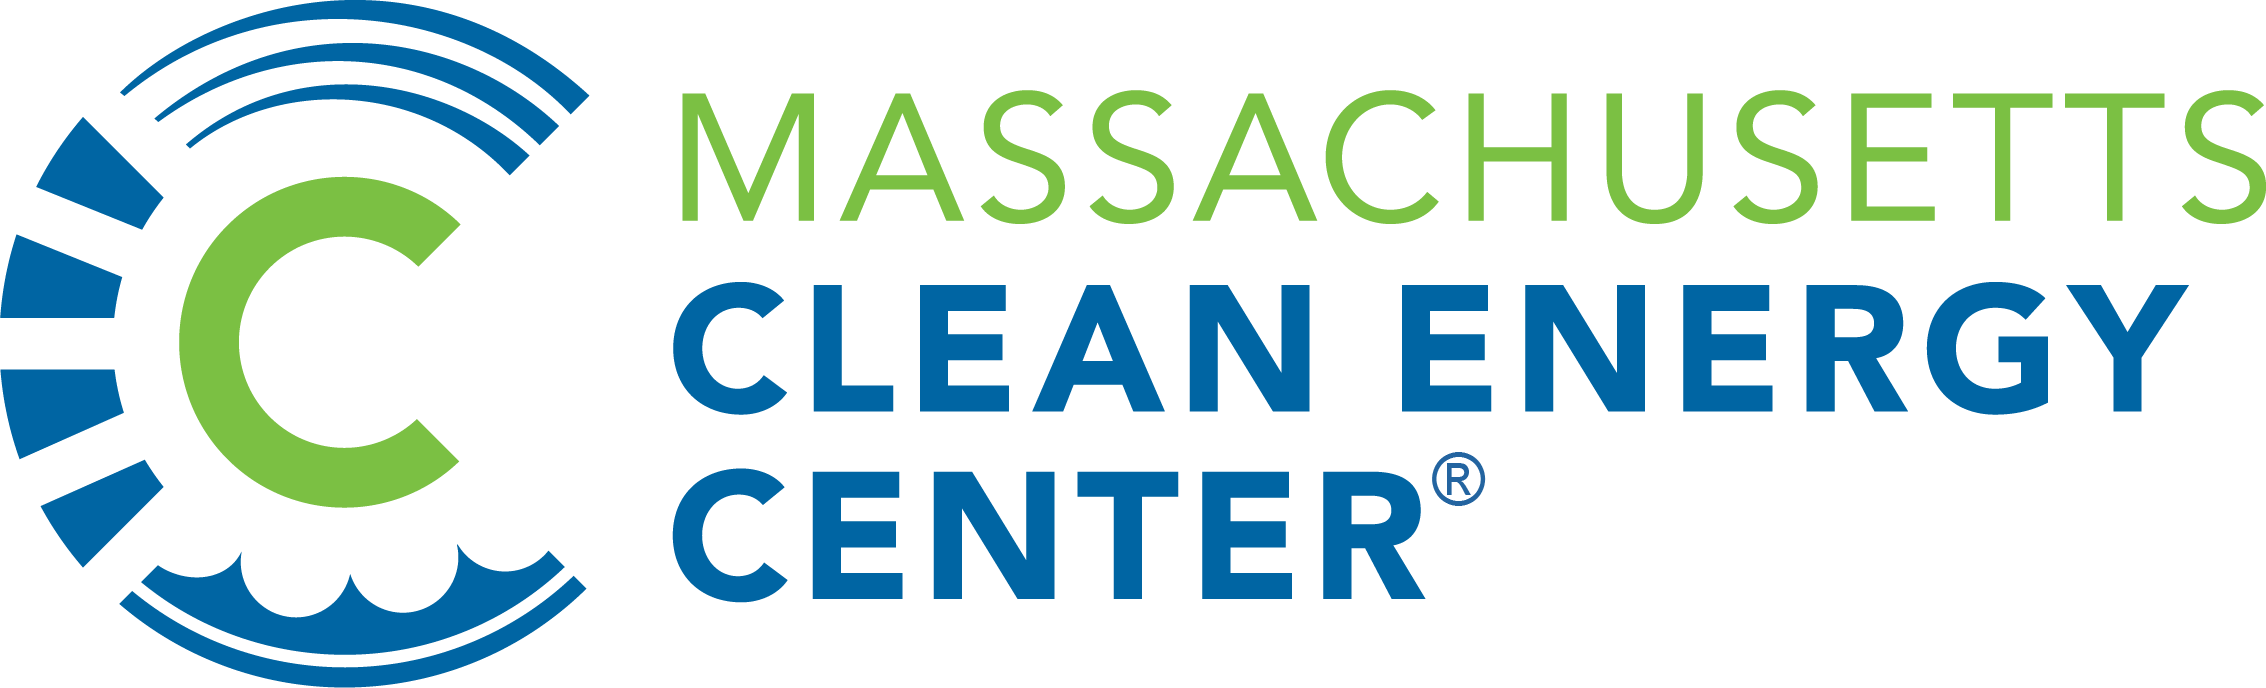 MassCEC logo Aug 2018.png